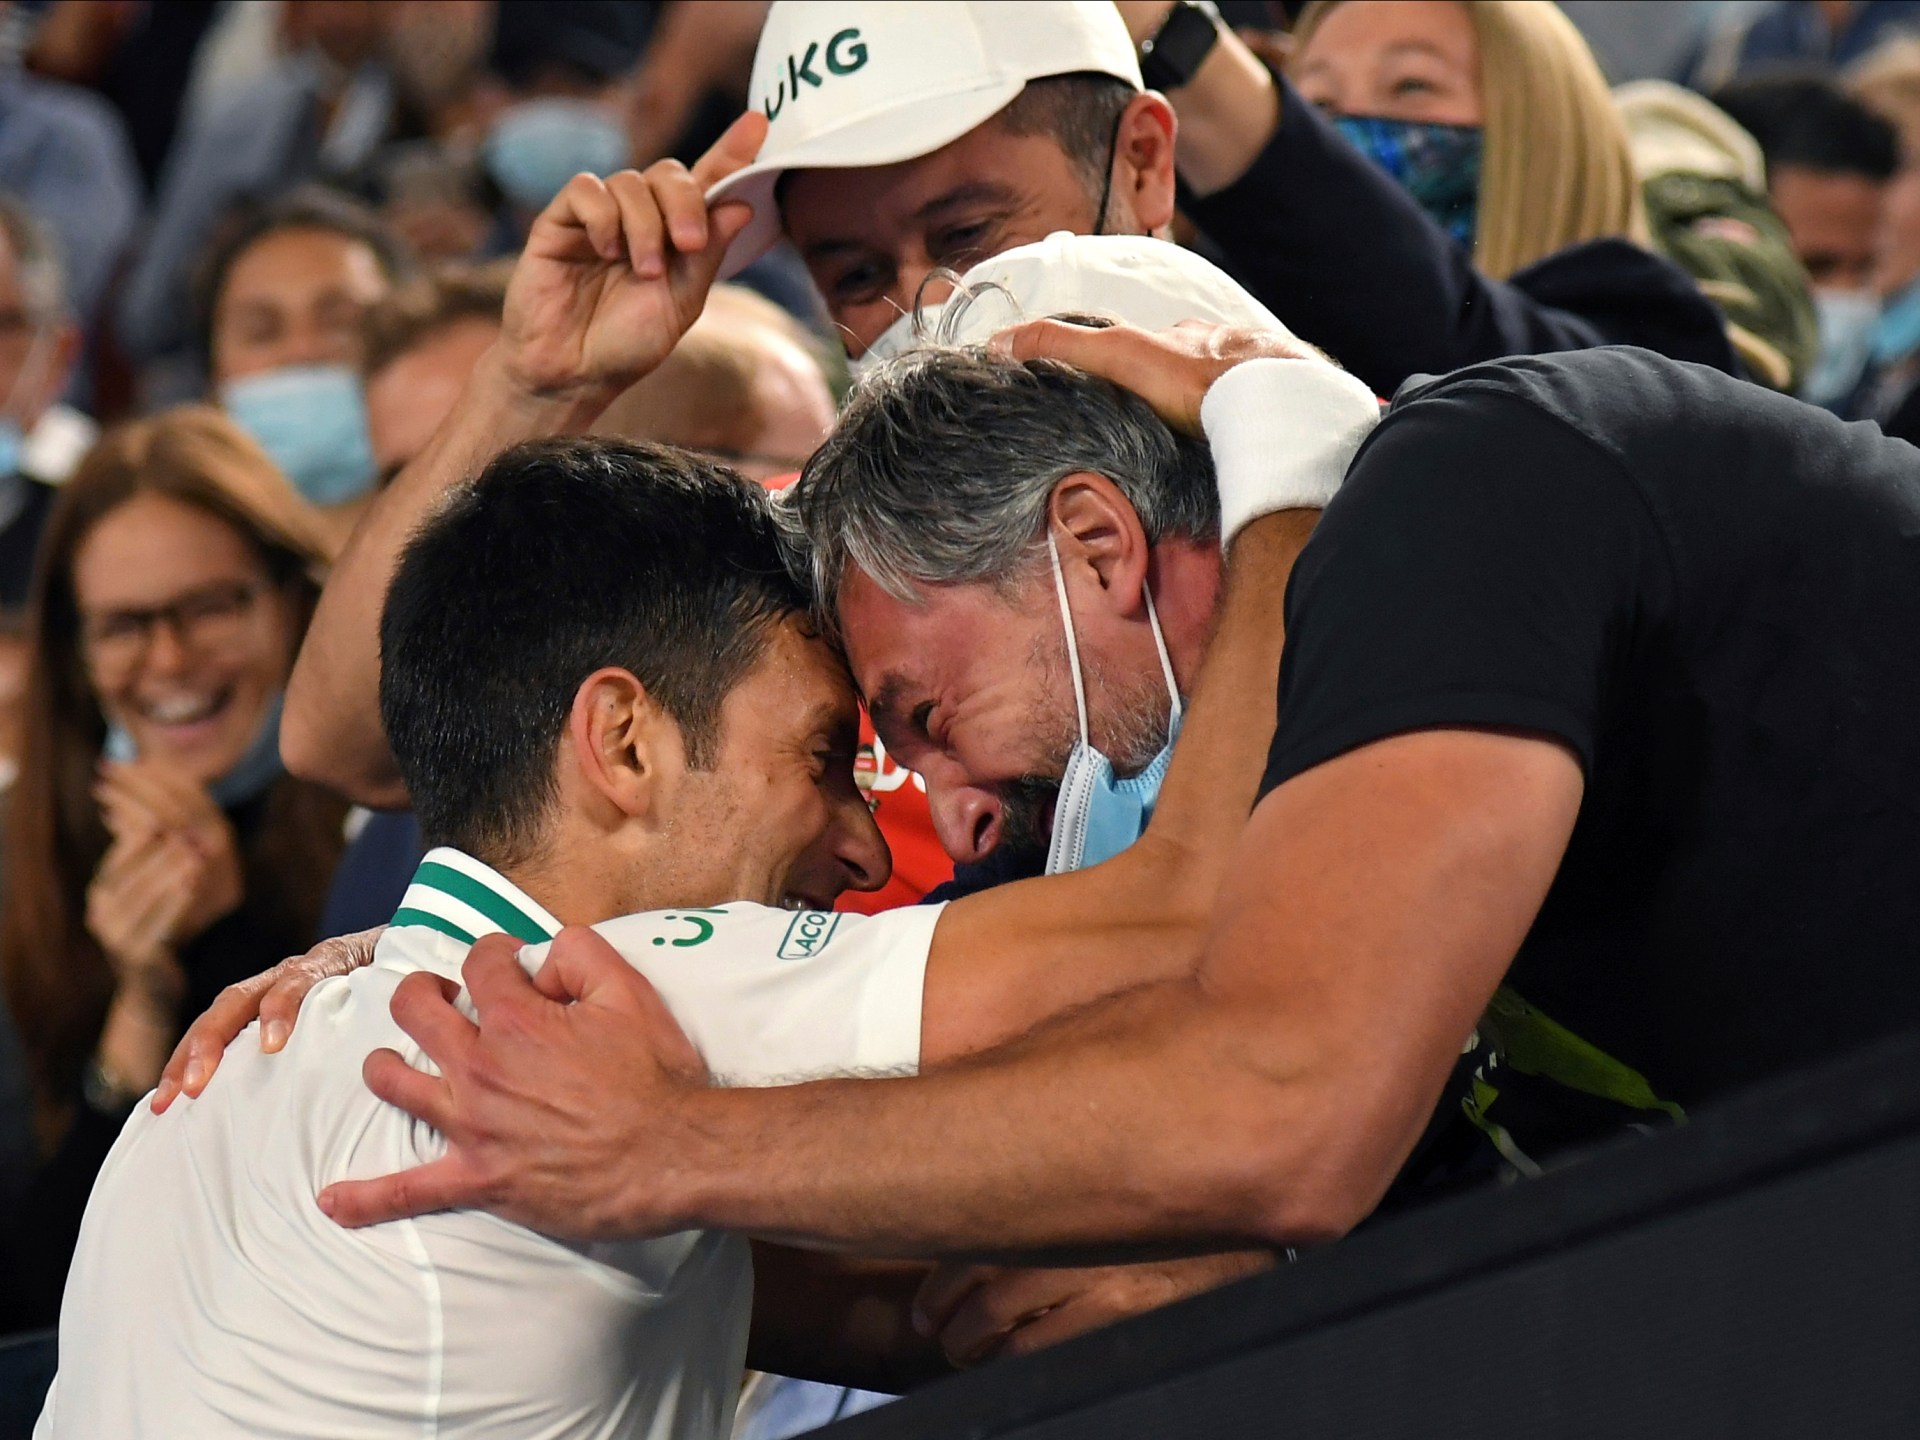 Djokovic and Ivanisevic split after winning 12 Grand Slam titles together | Tennis News